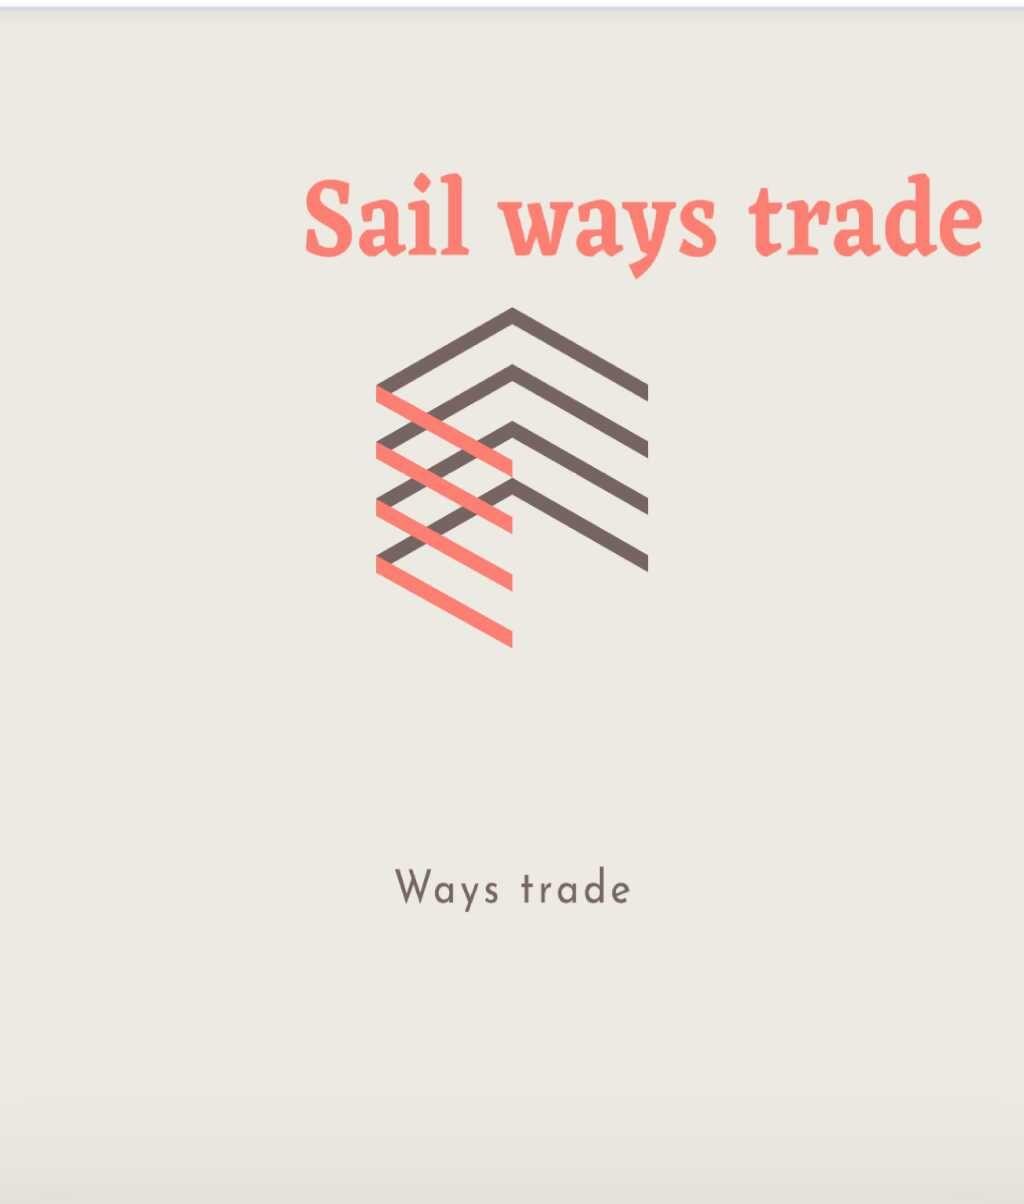 Sail ways trade